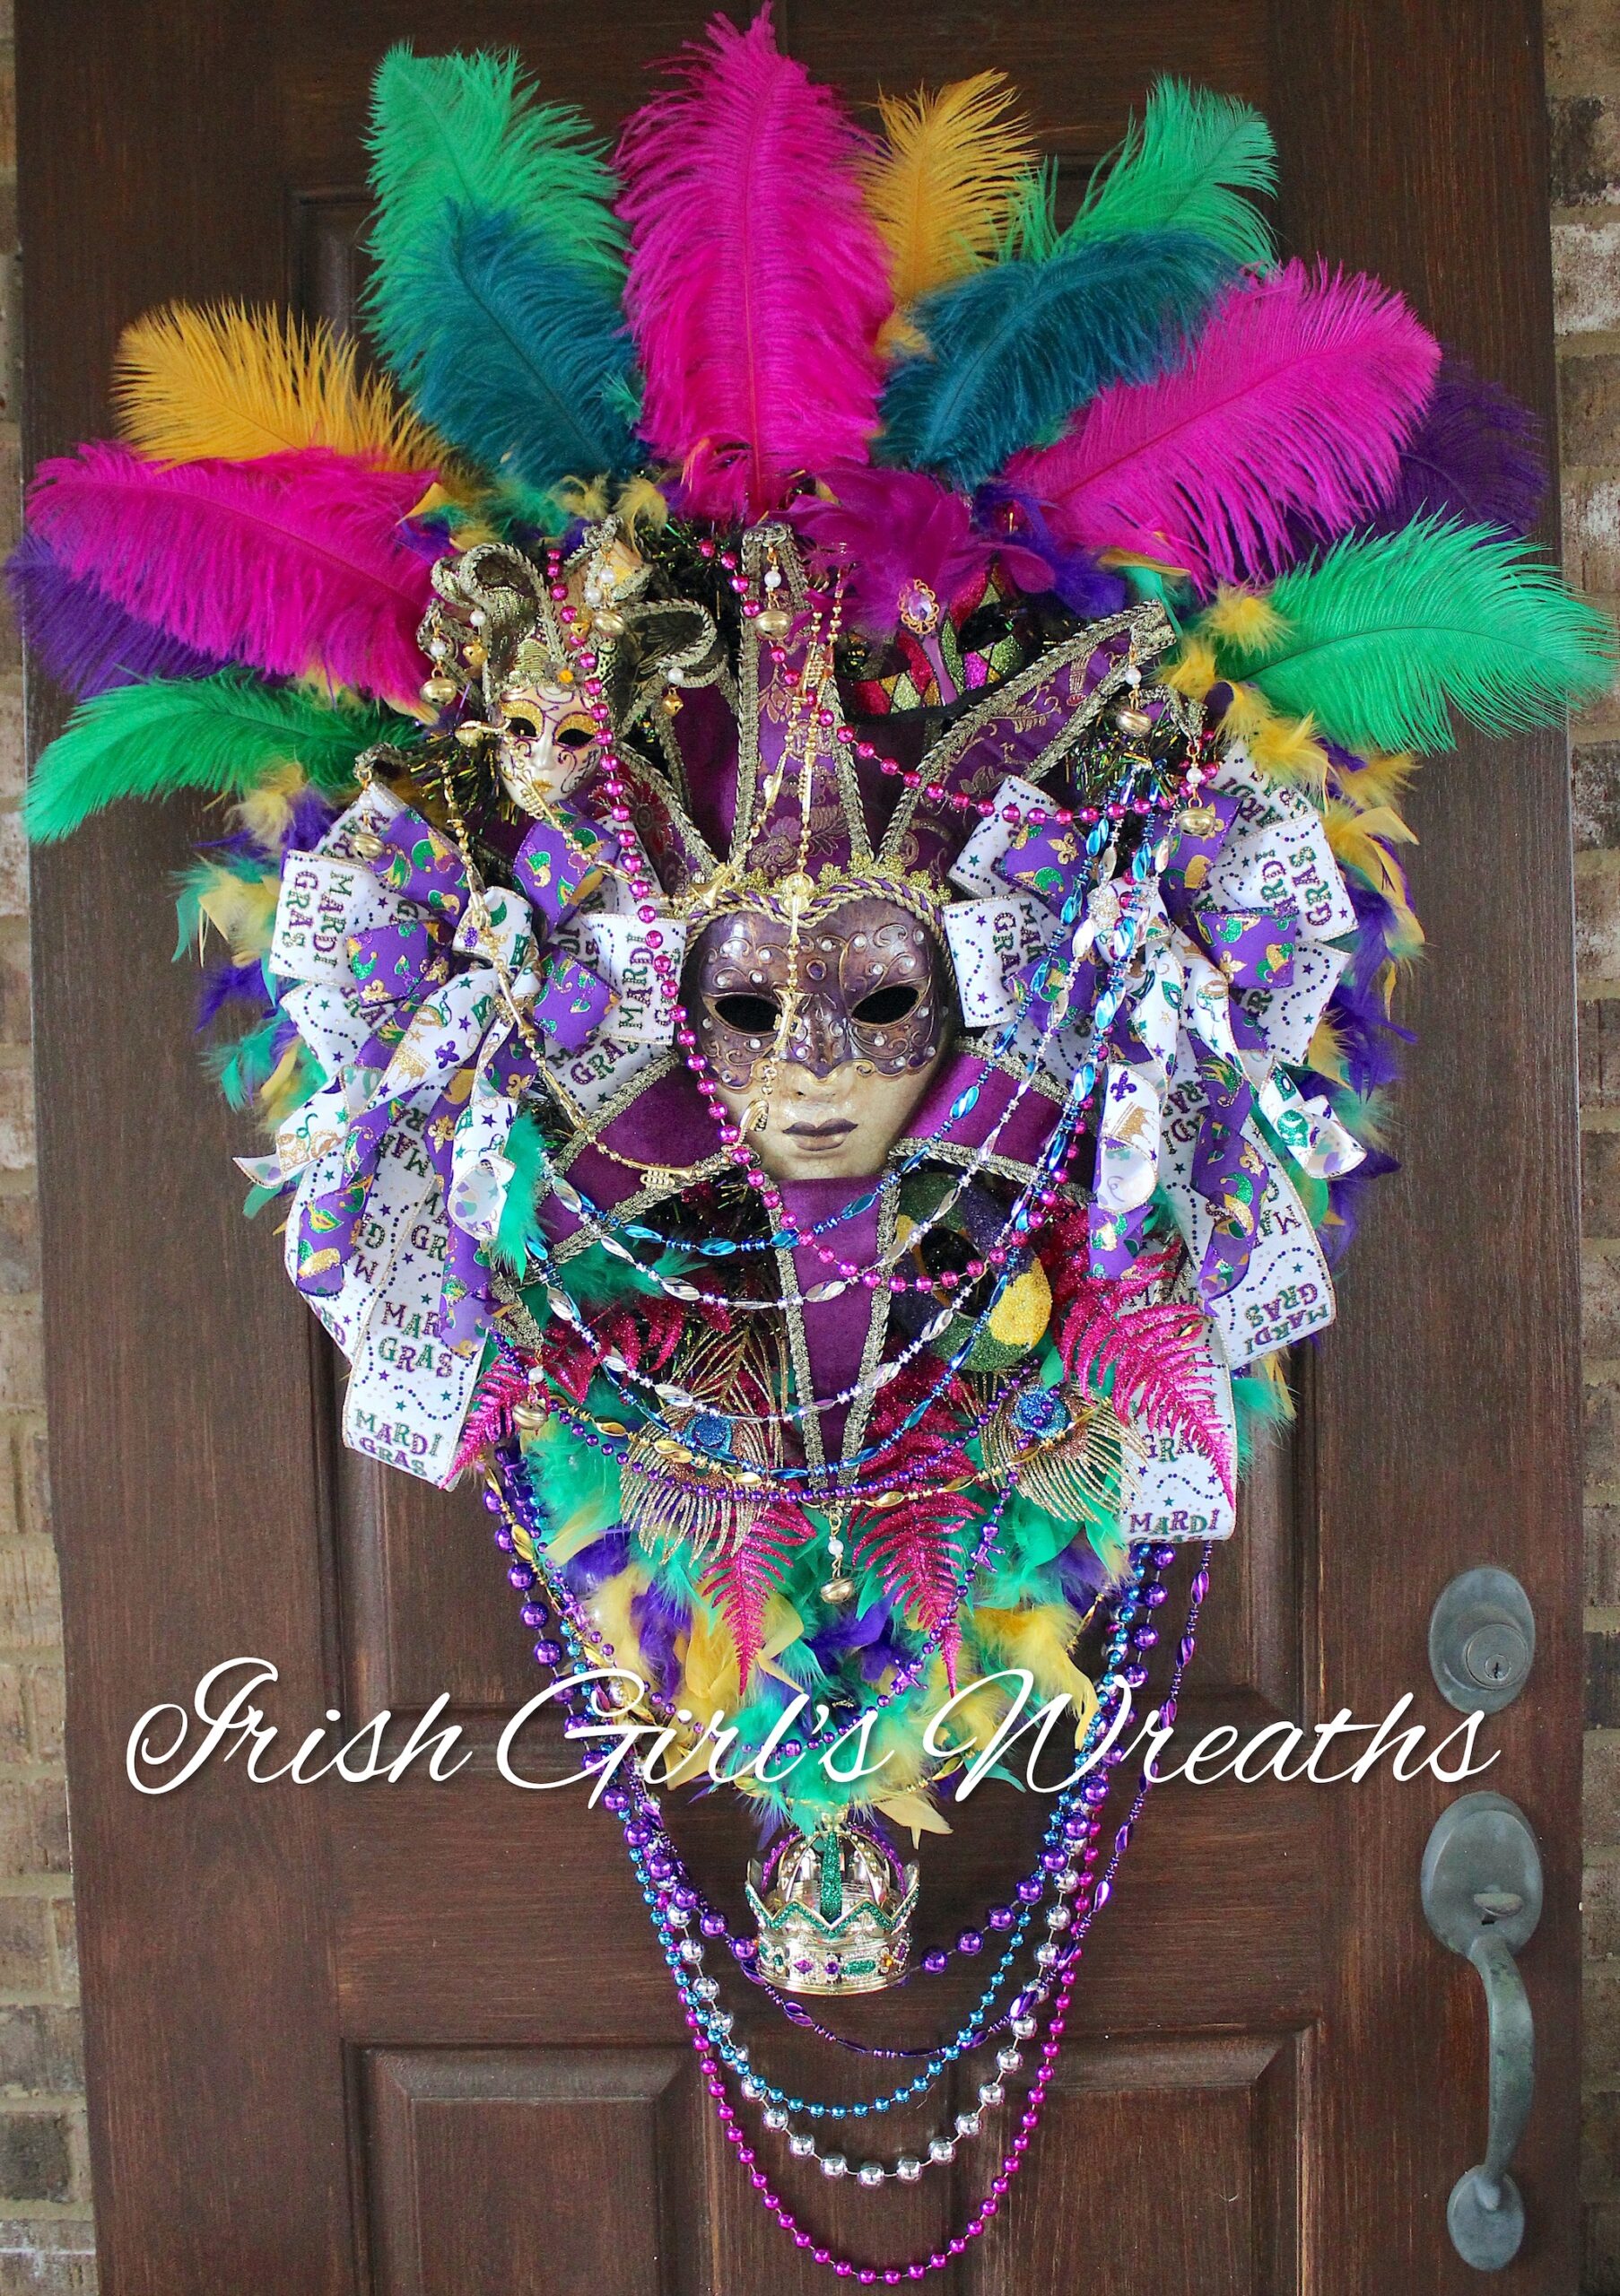 Mardi Gras Masquerade Purple Feather Headpiece Carnival Cosplay Dress Up -   Finland